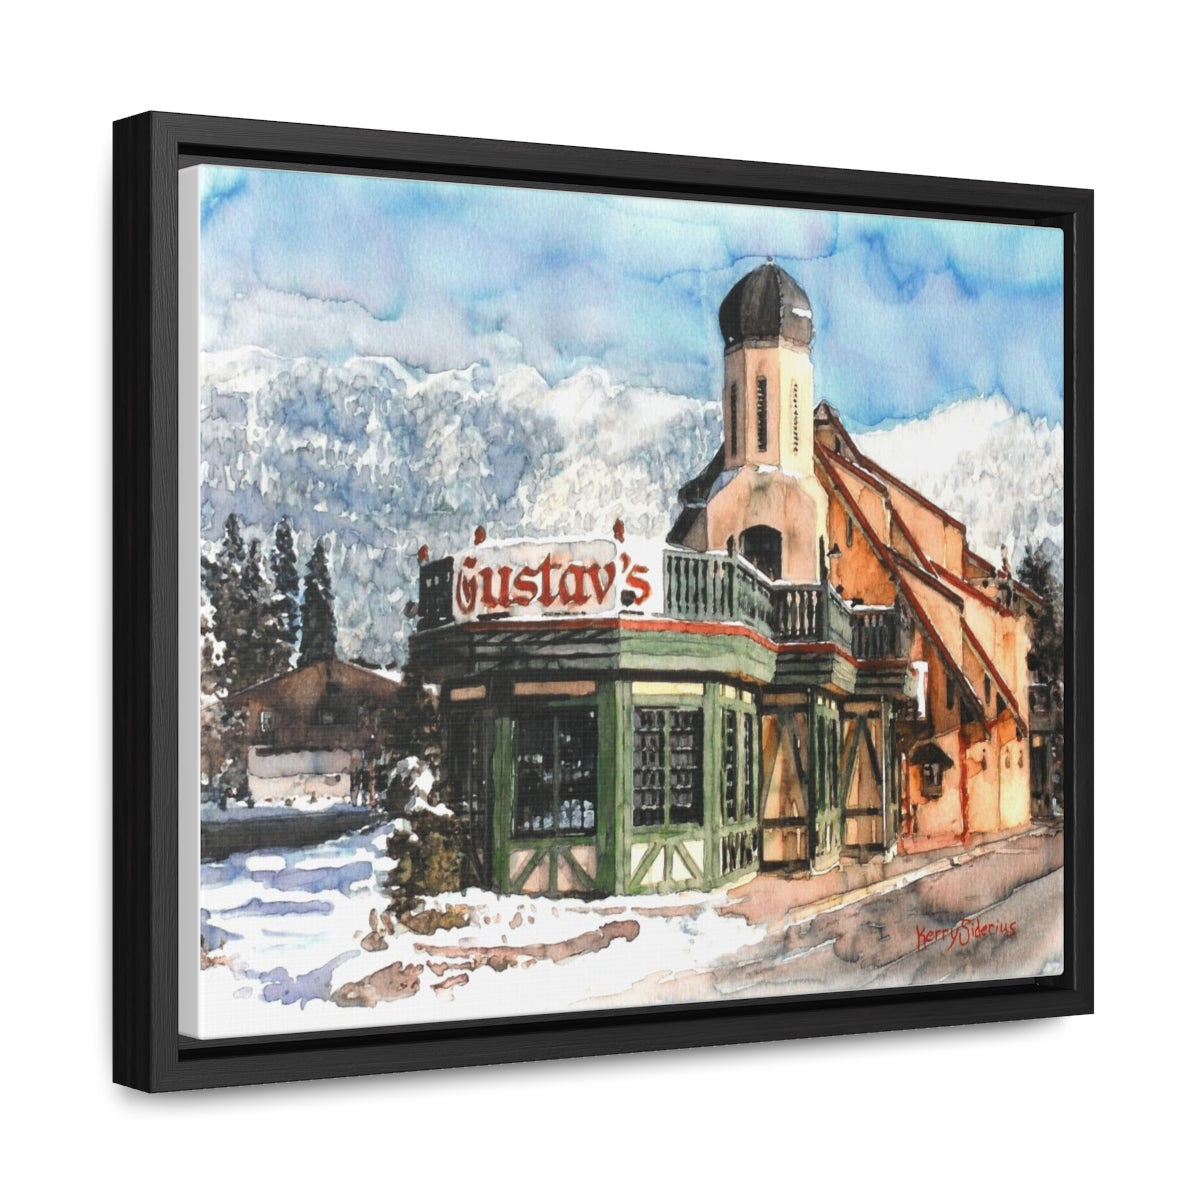 "Leavenworth's Gustav's in the Wintertime" Poplar Wood Framed Canvas - Kerry Siderius Art 